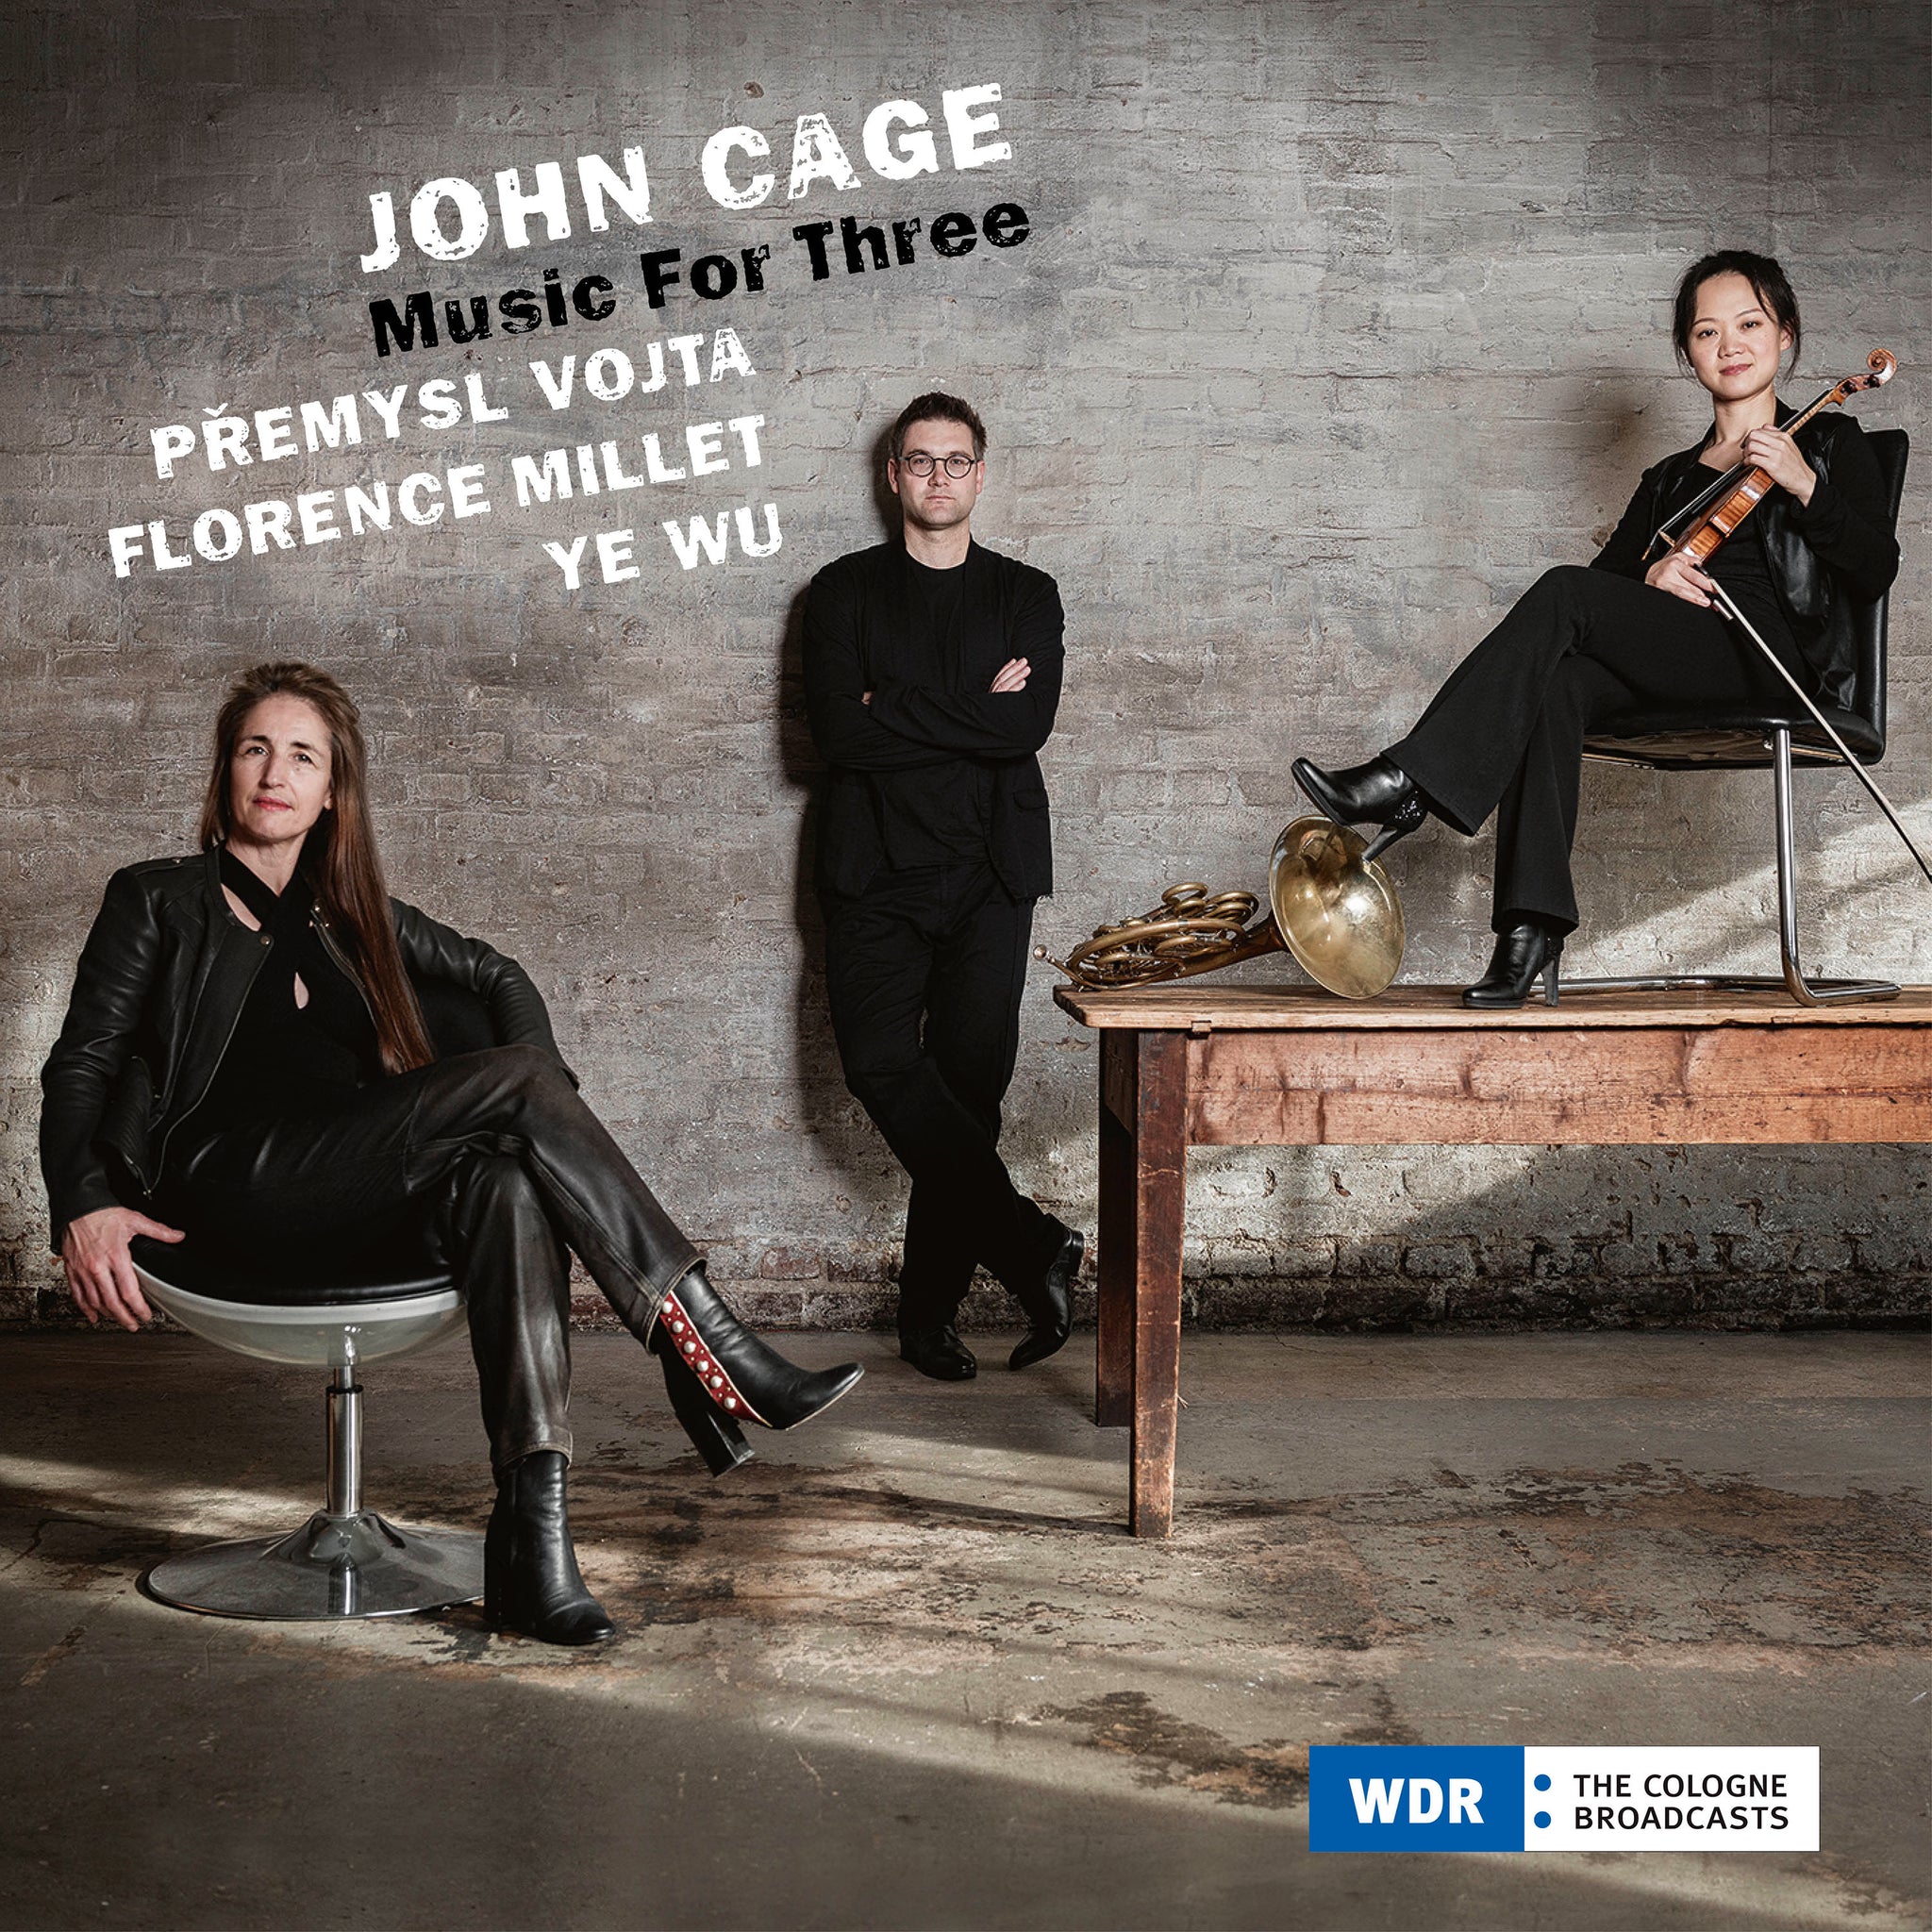 Cage: Music for Three / Přemysl Vojta, Ye Wu, Florence Millet